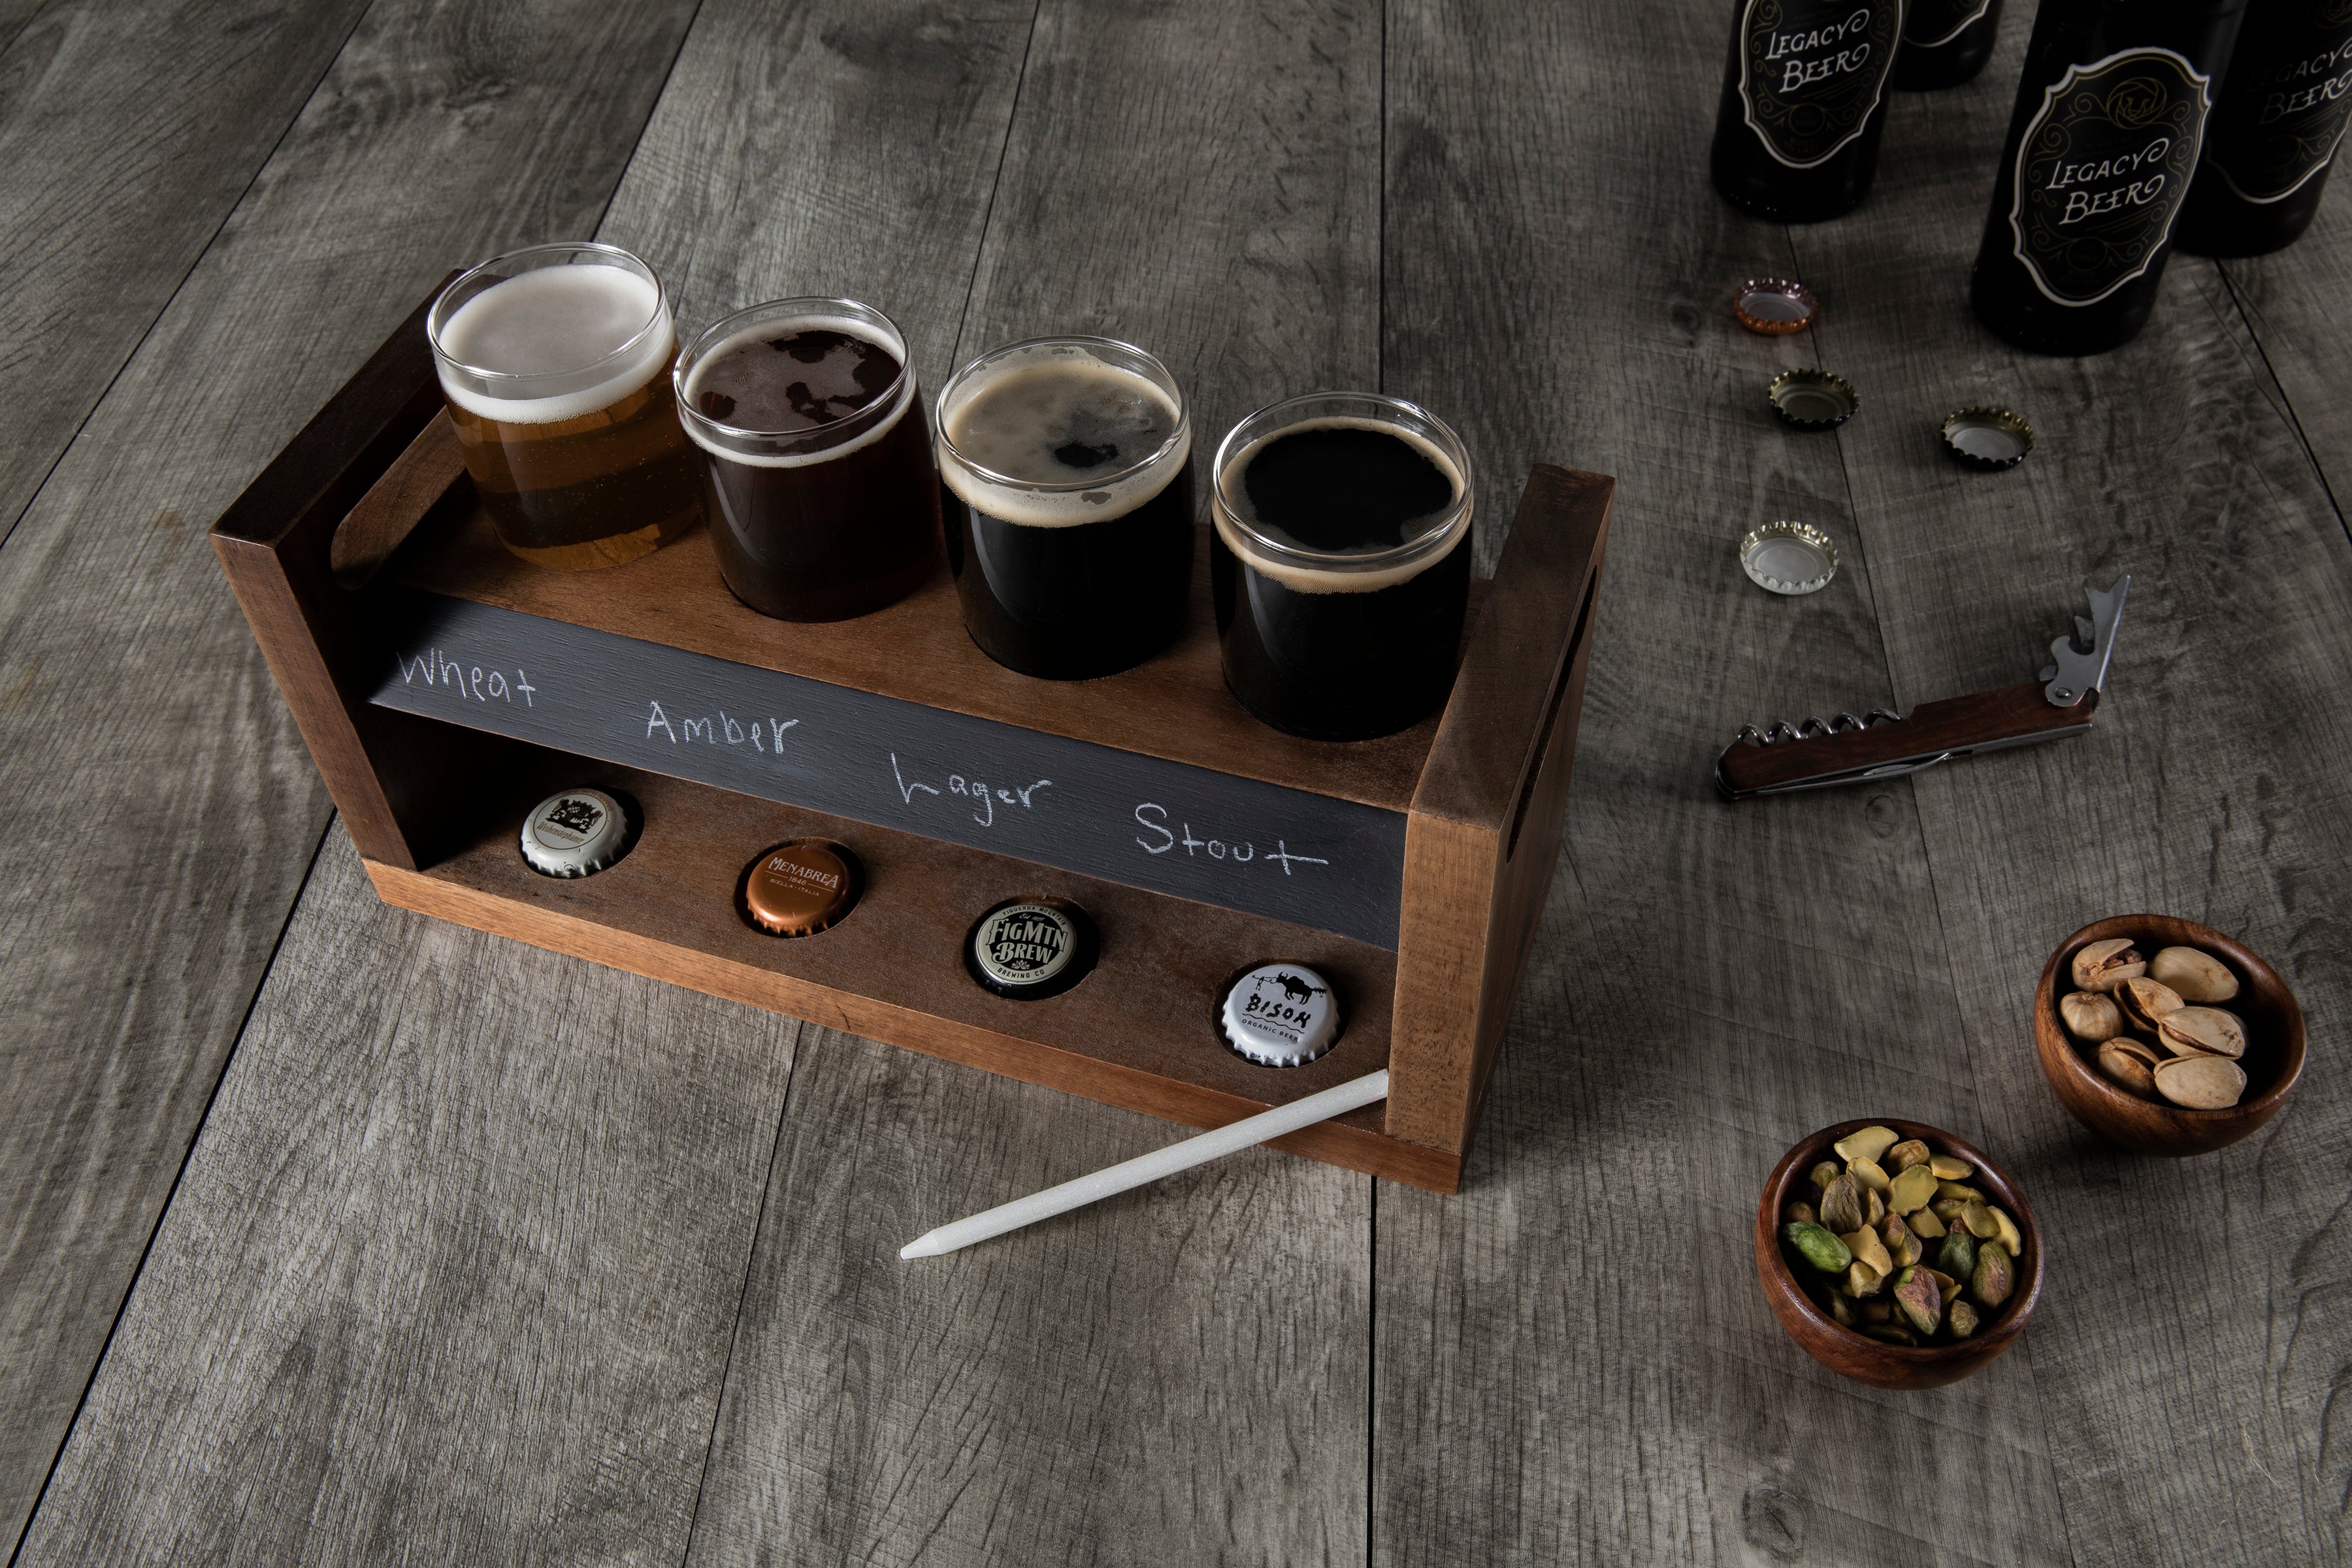 New England Patriots - Craft Beer Flight Beverage Sampler